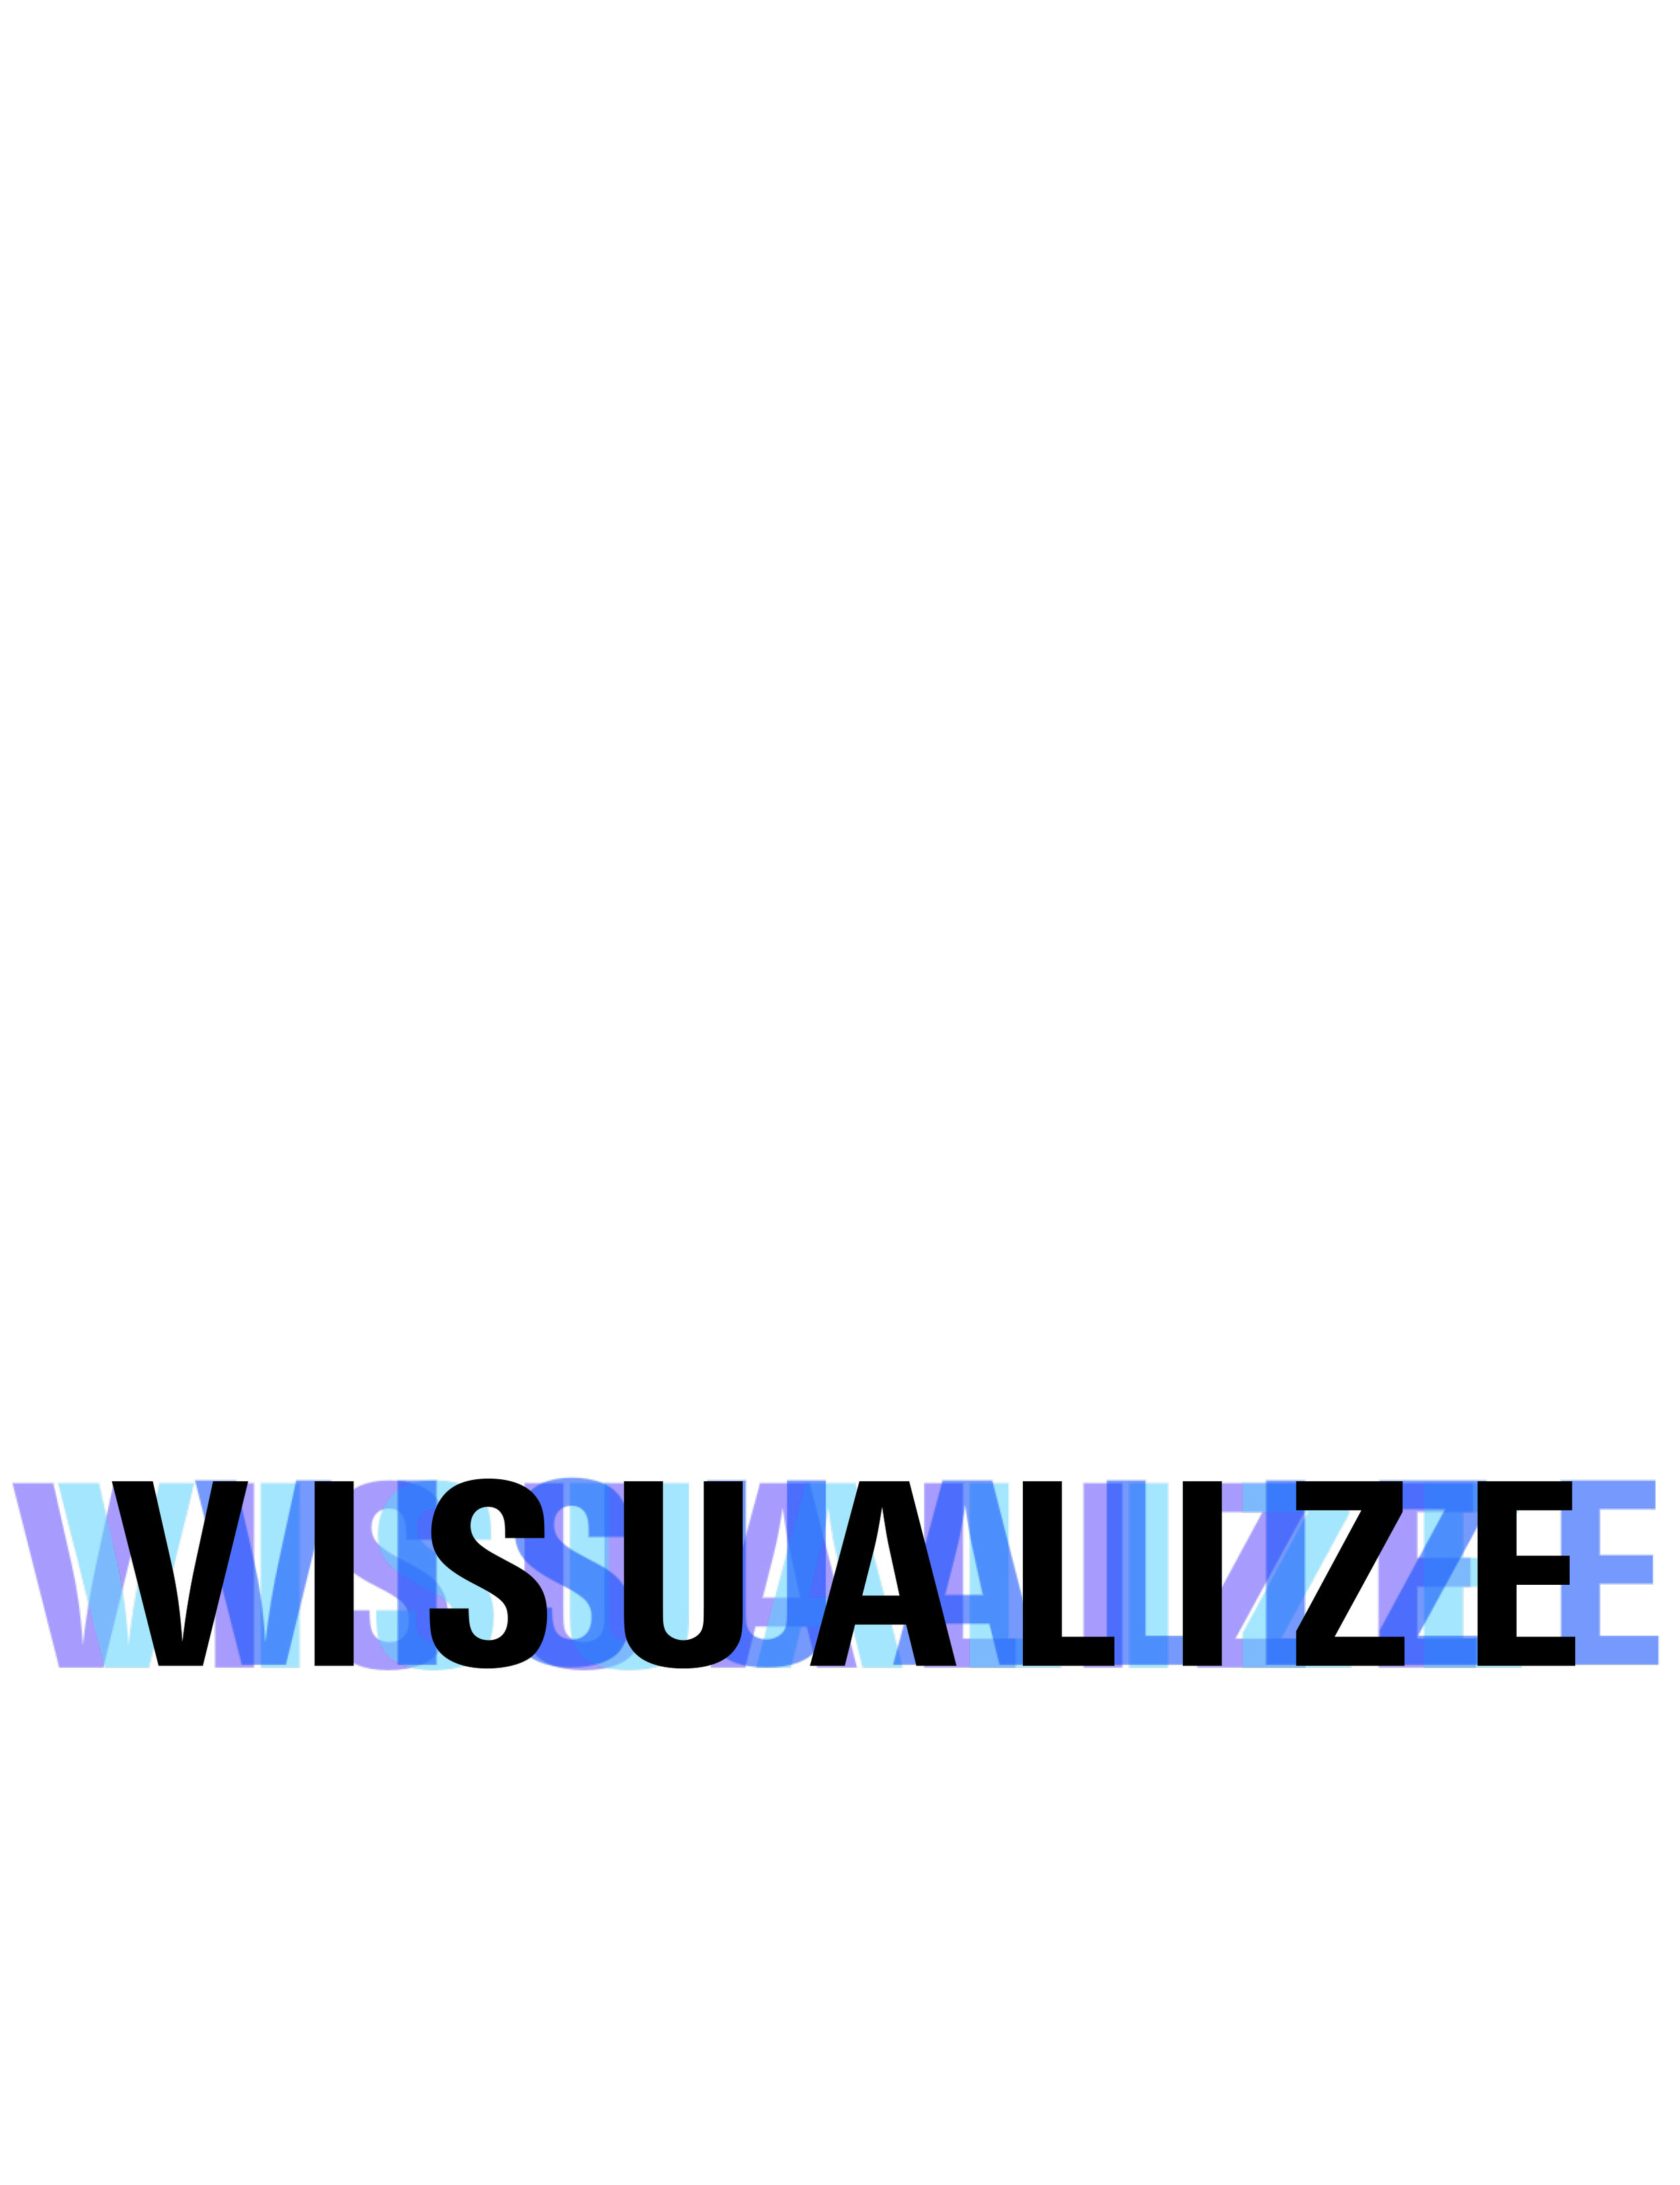 Visualize White.jpg